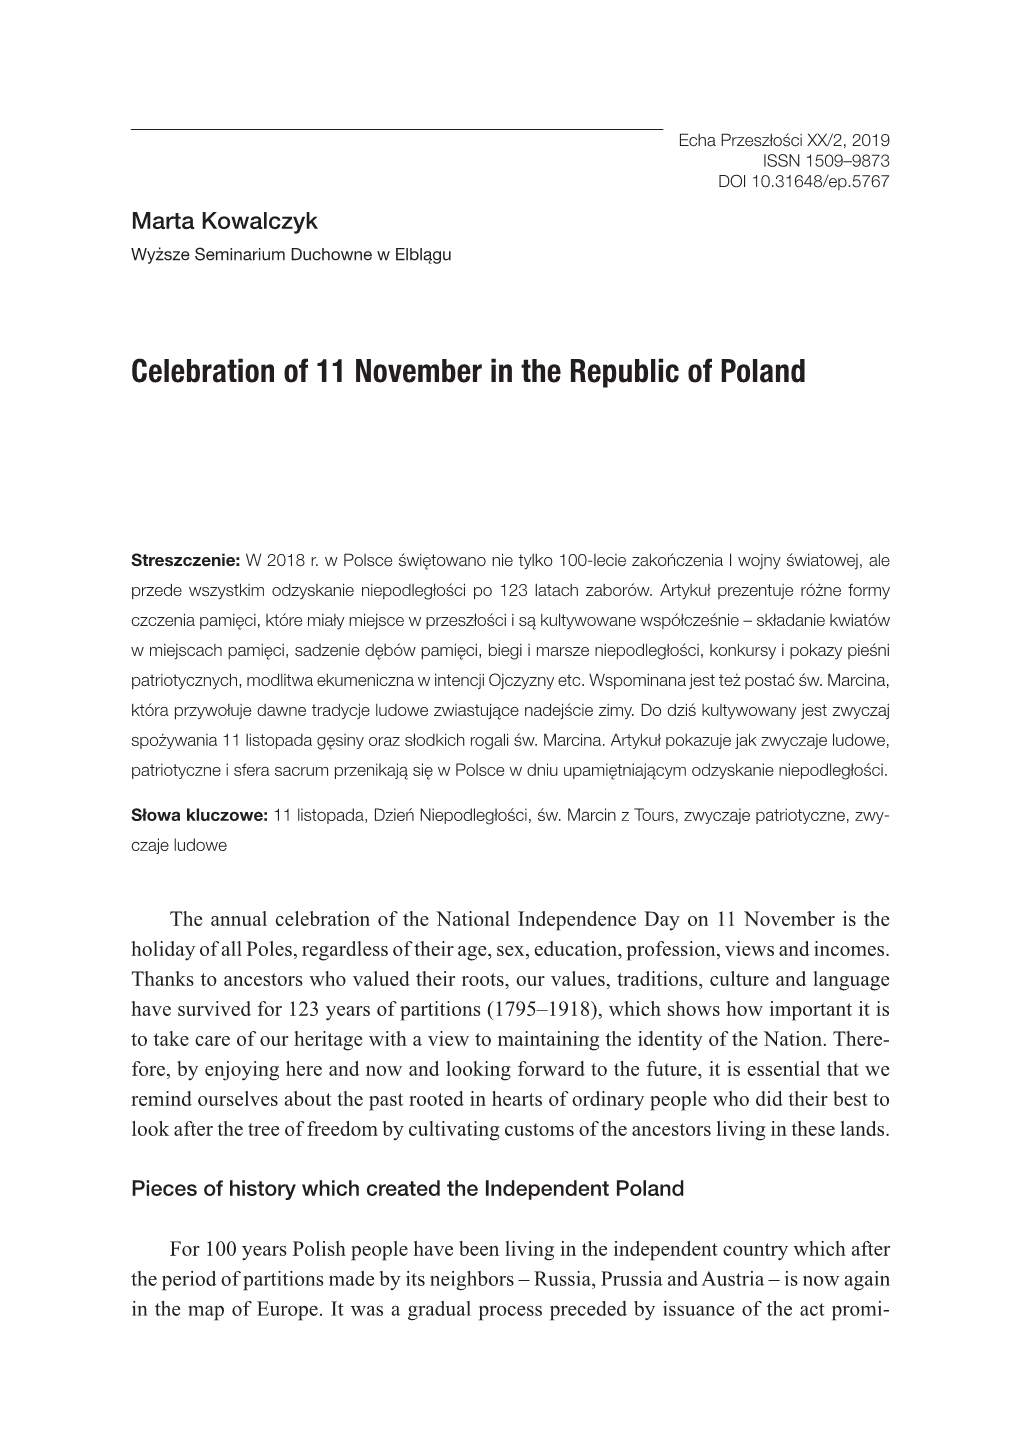 Celebration of 11 November in the Republic of Poland